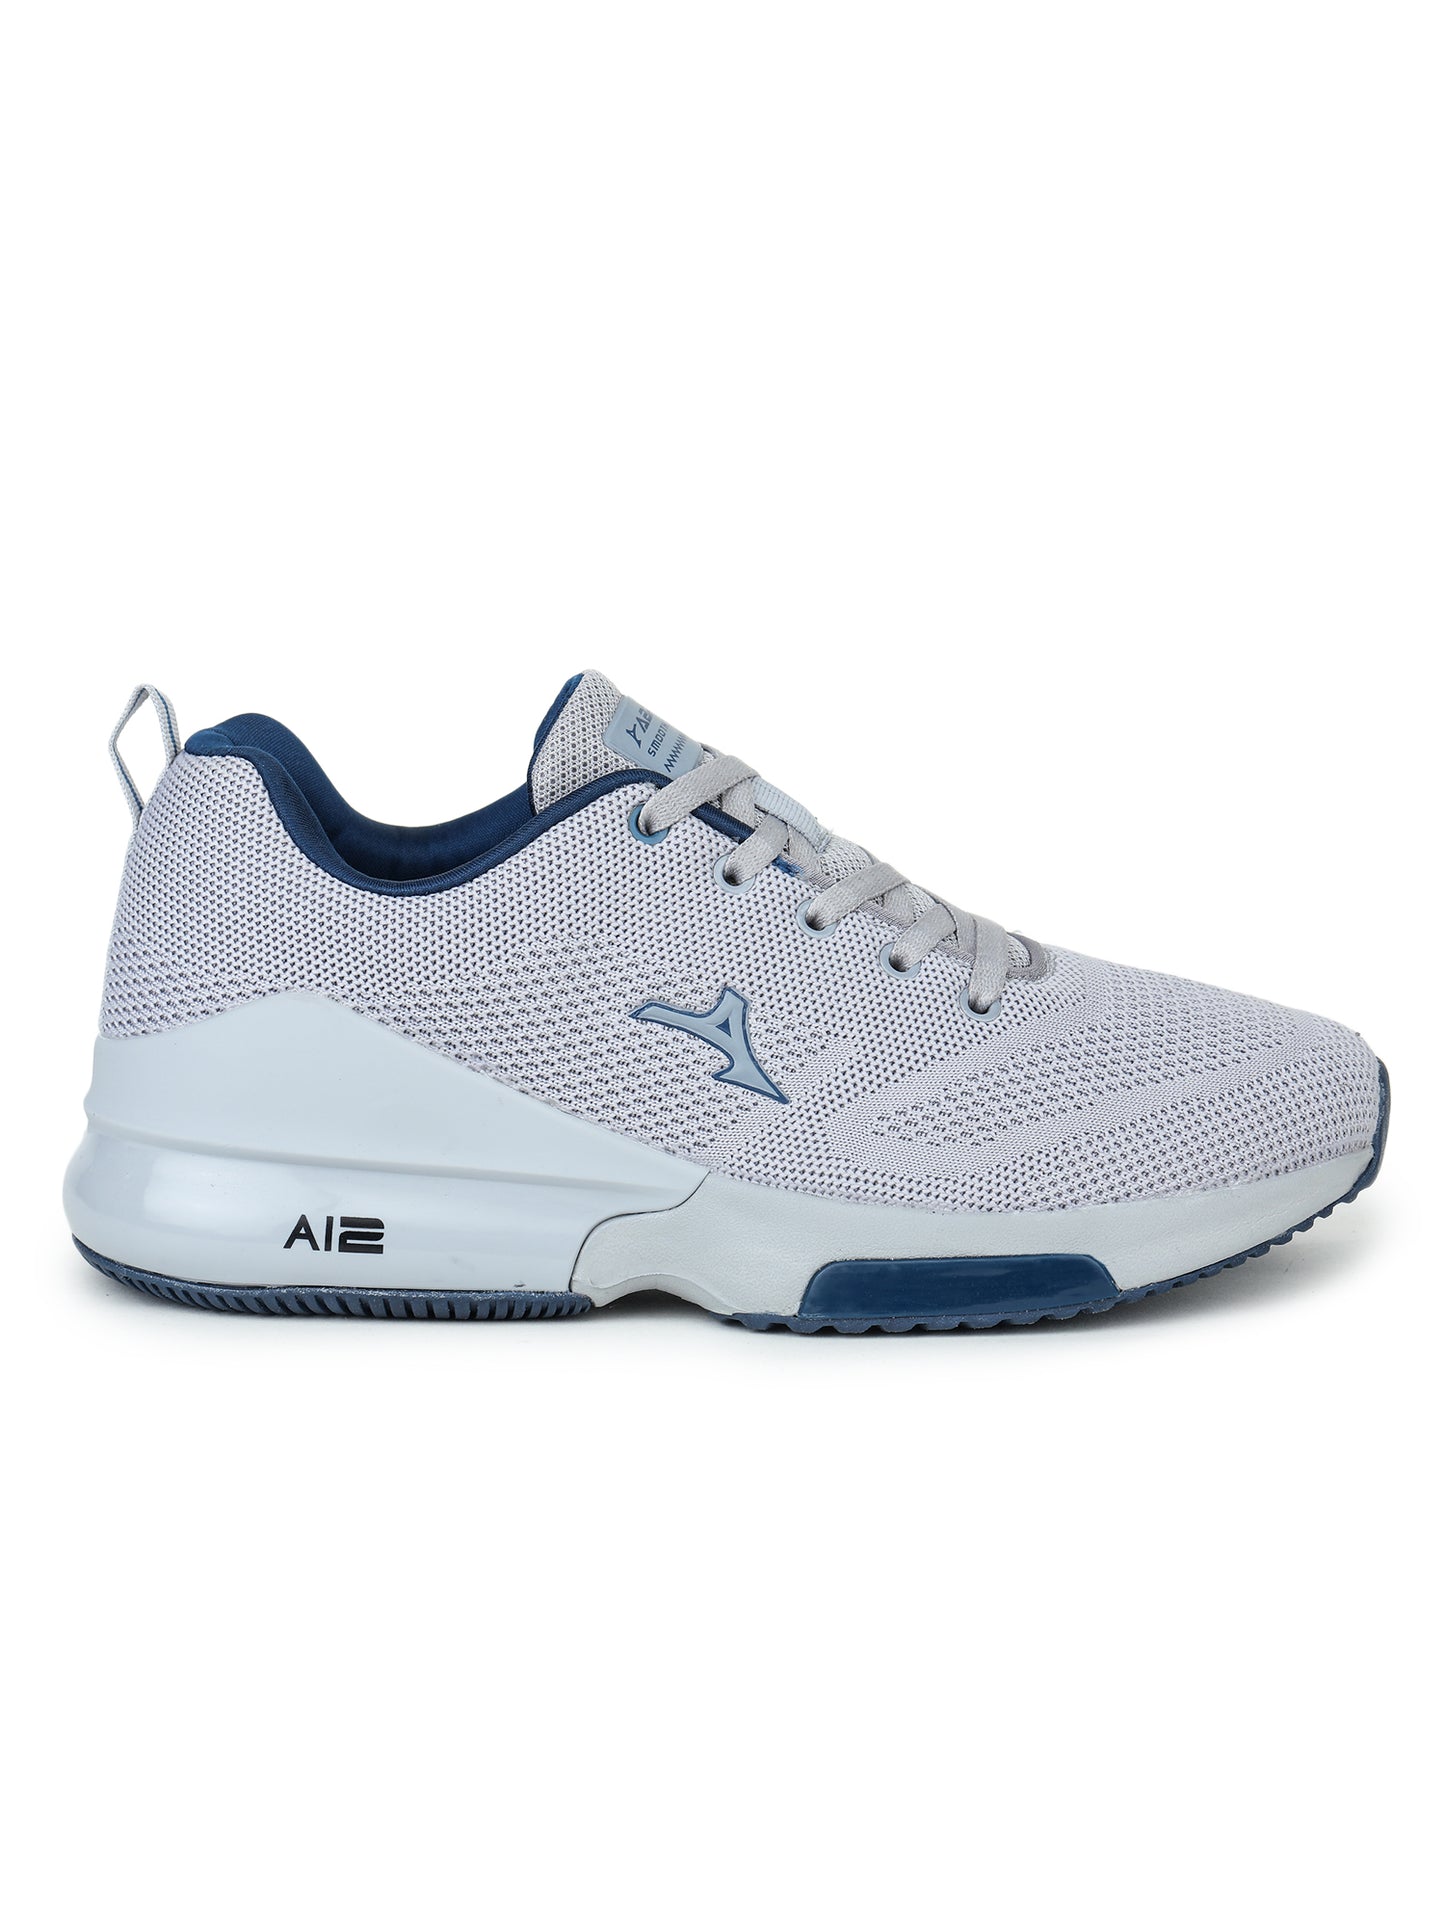 ABROS Austin Sports Shoes For Men